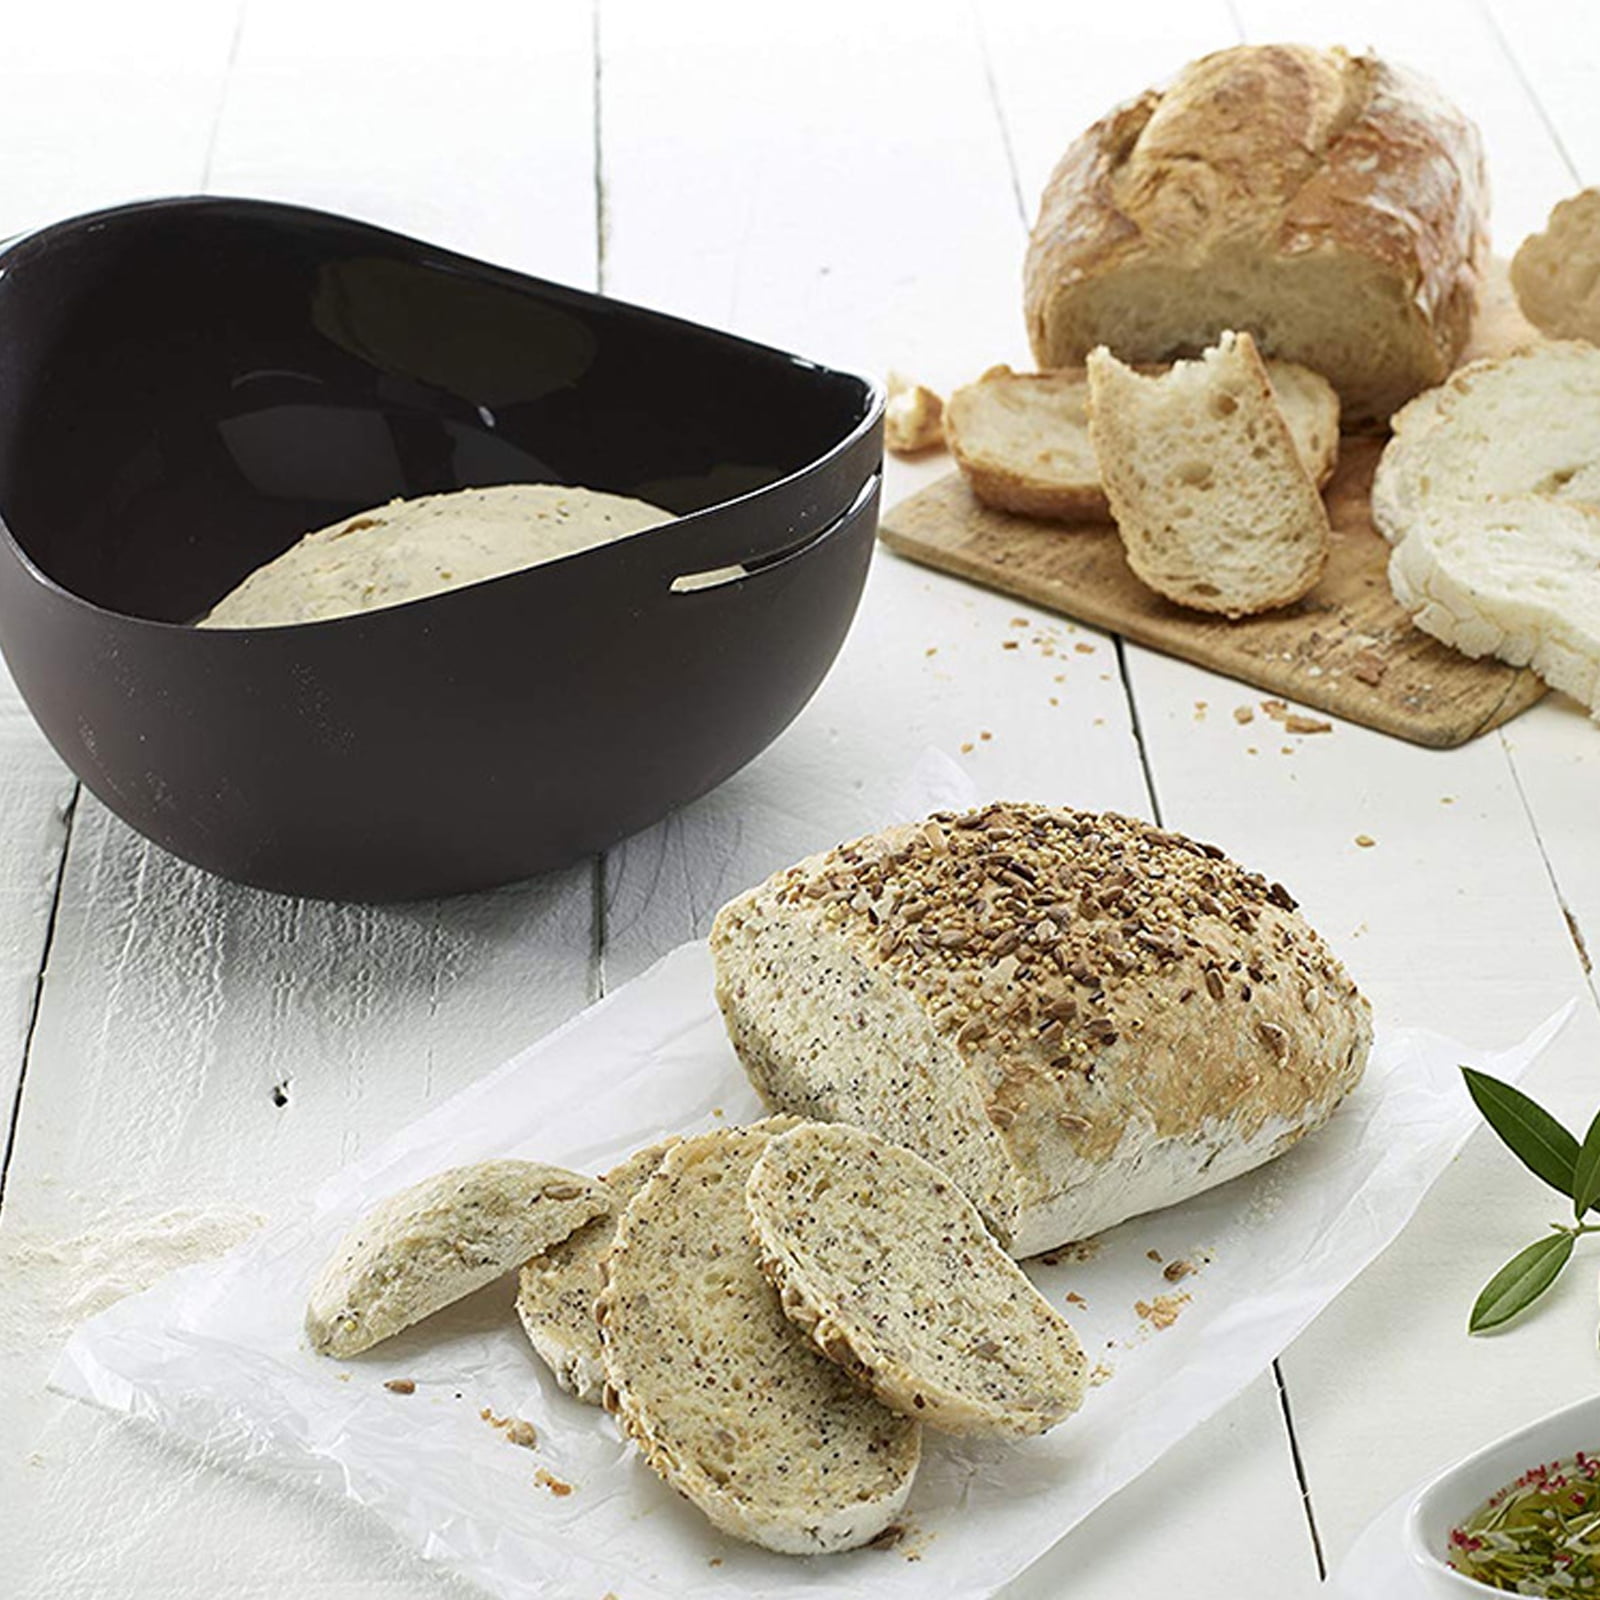 Aousin Silicone Bread Maker, Folding Bread Baking Pan Microwave Vegetable Steamer Pans Heat Resistant Reusable,Black 2Pack, Size: 2pcs